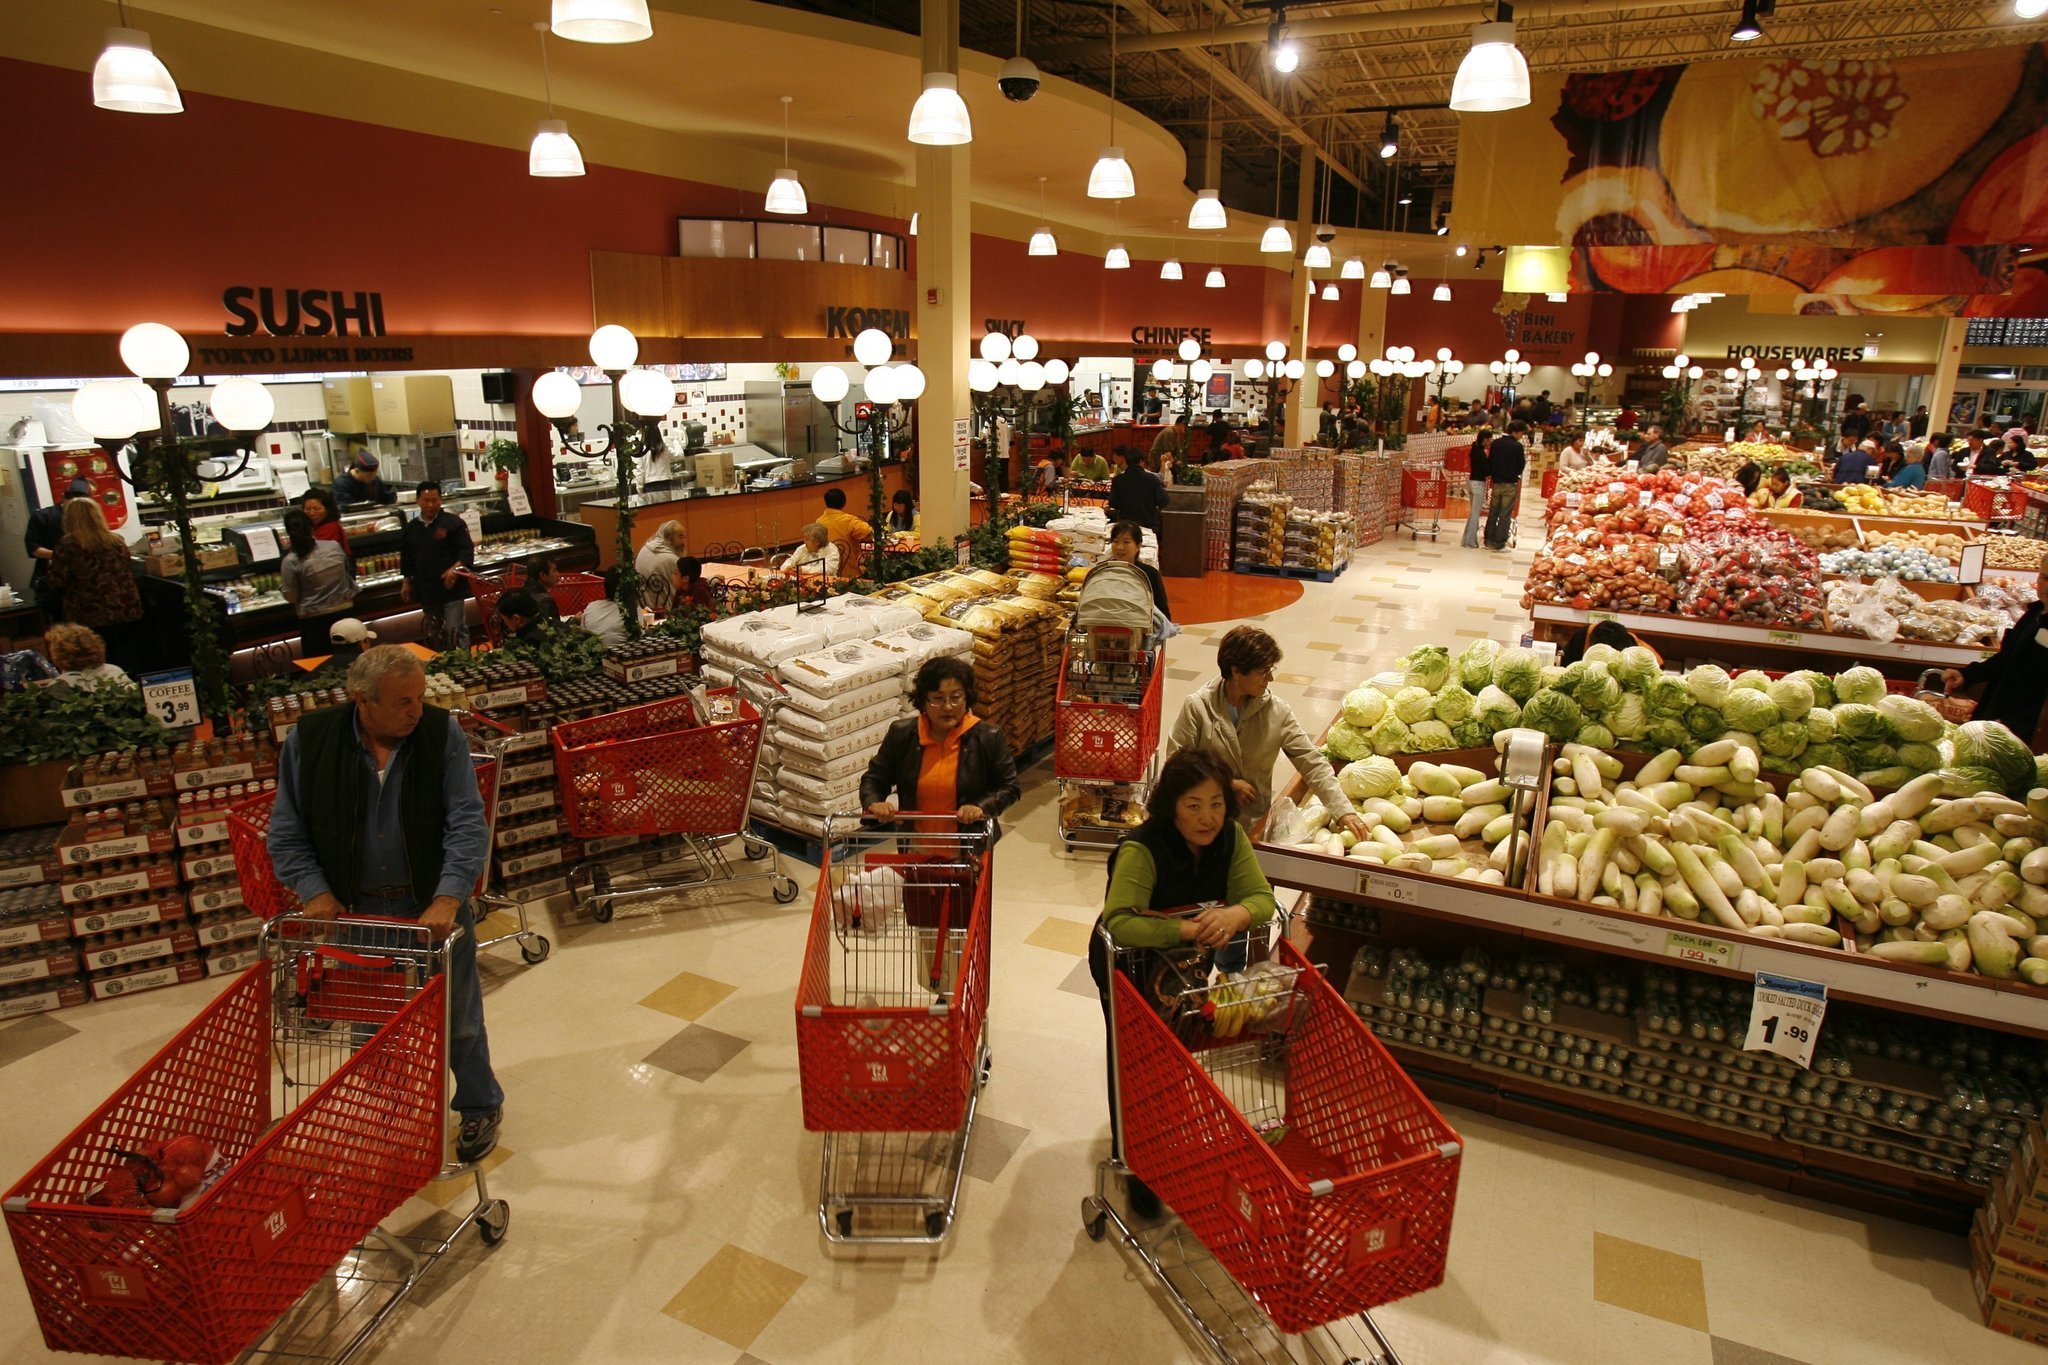 H Mart Asian mega supermarket opening store, food court in West Loop - Chicago Tribune